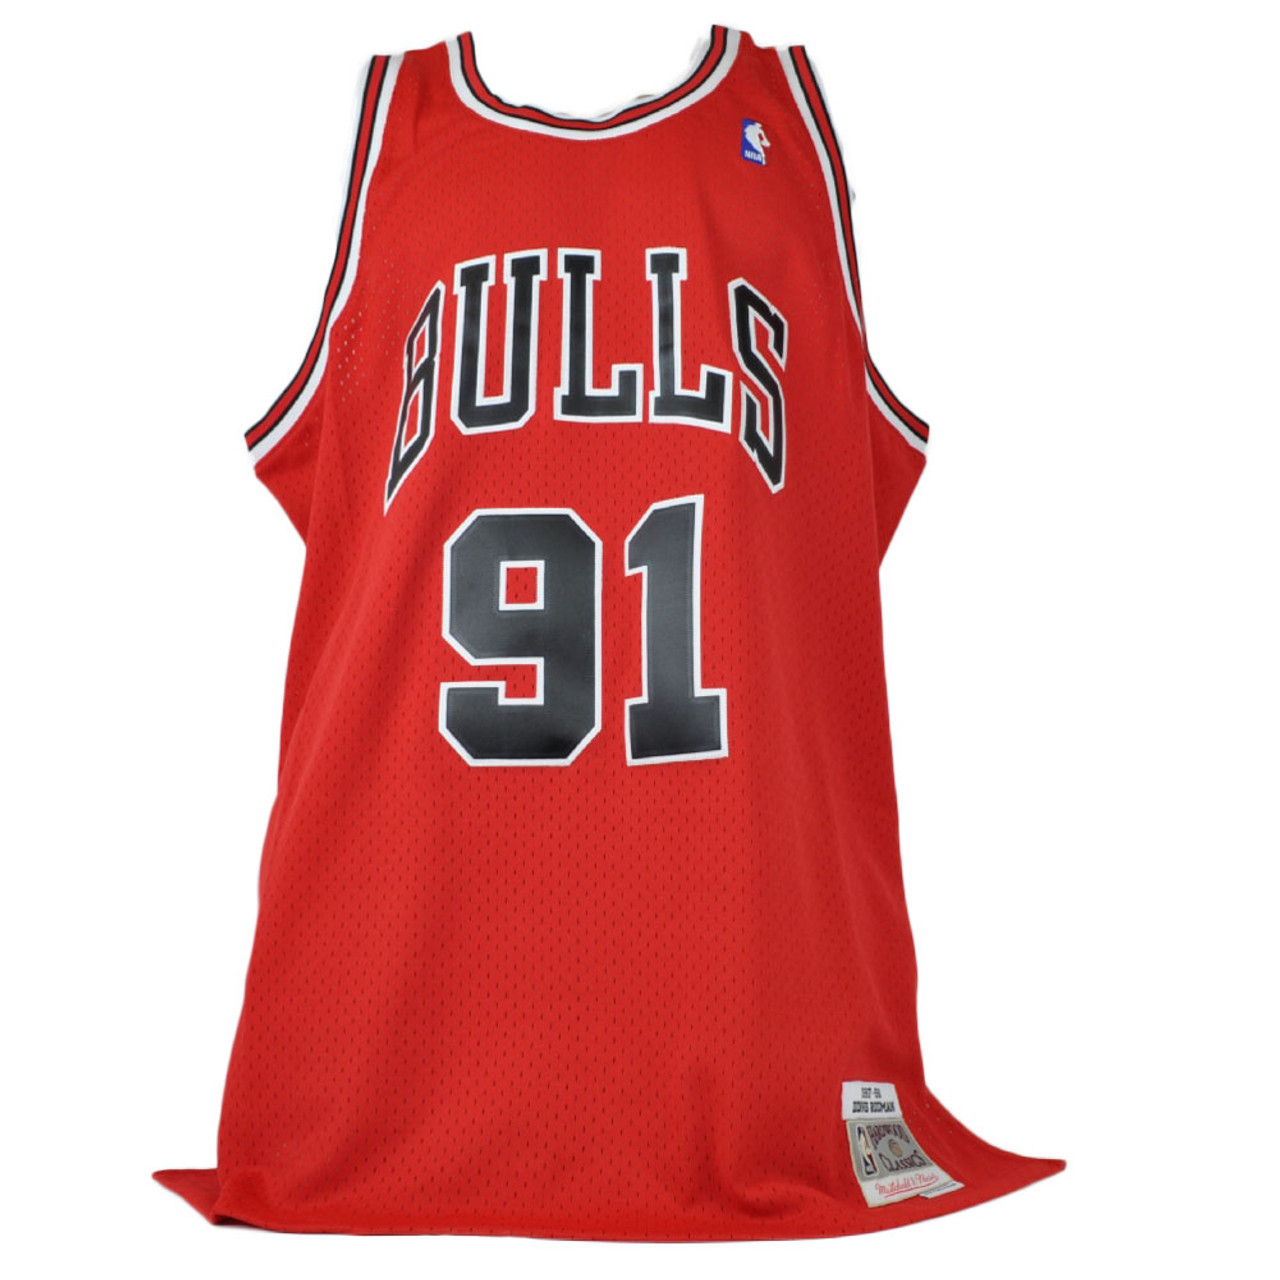 chicago bulls jersey 91